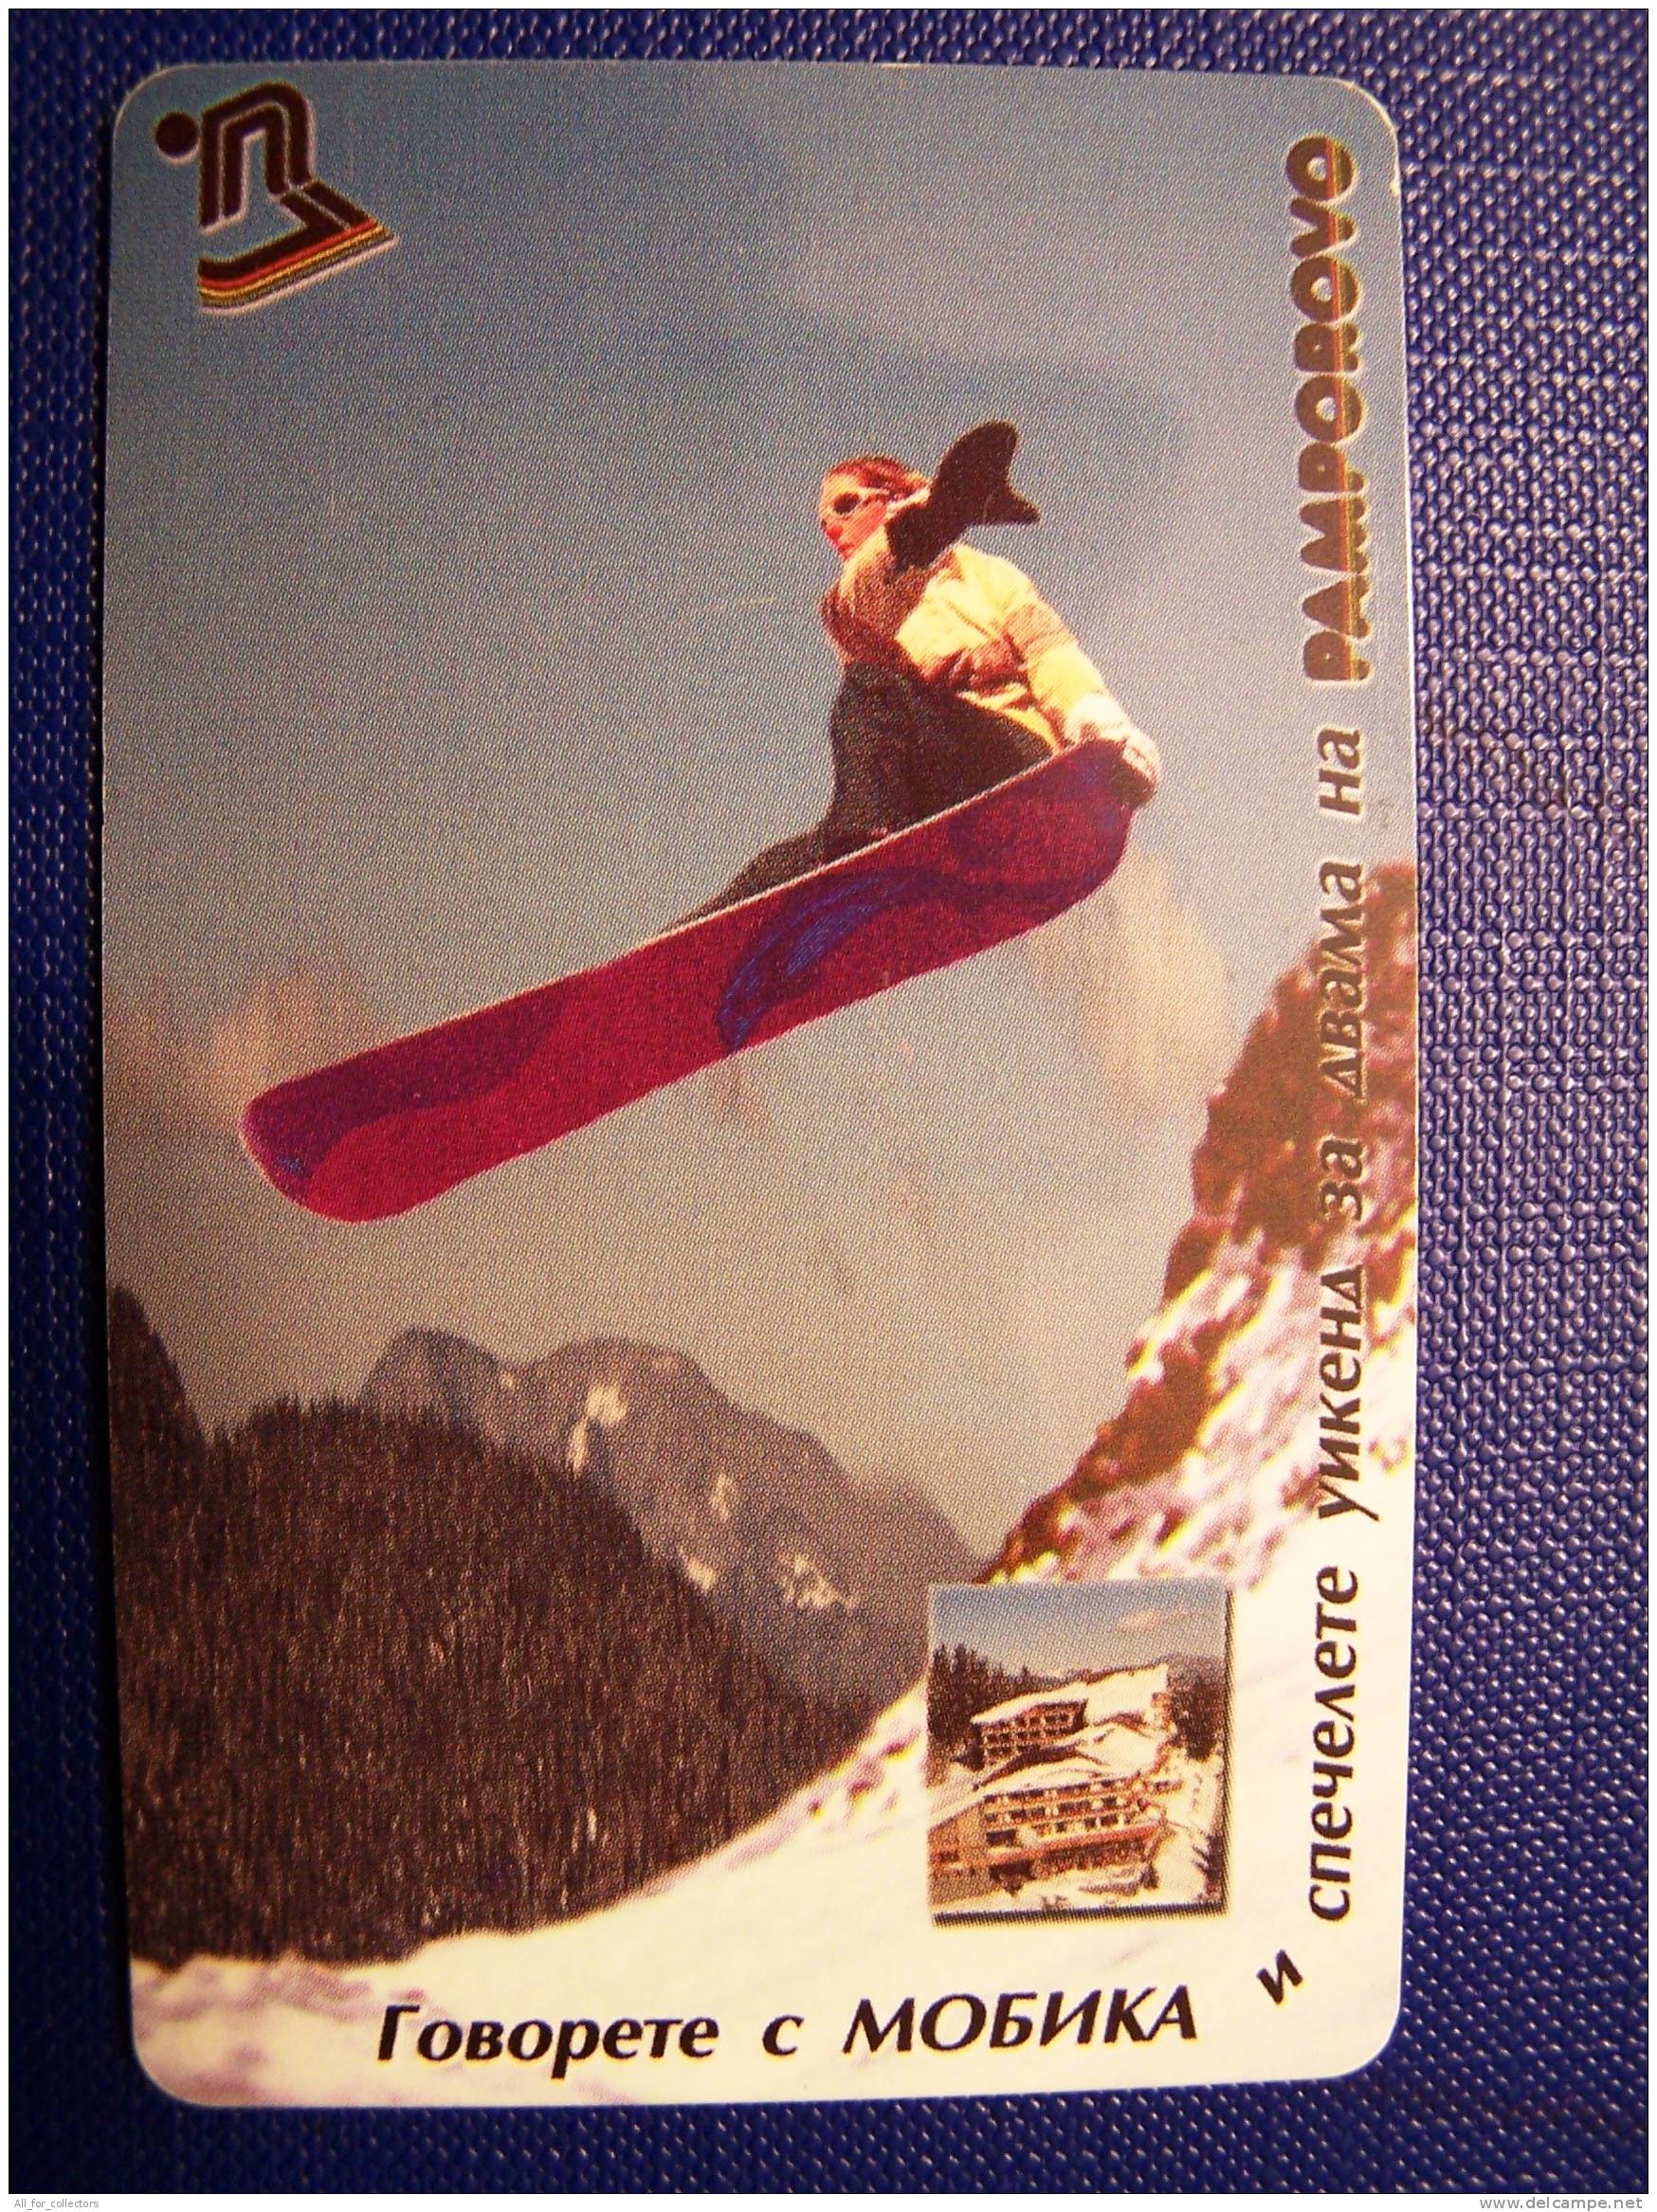 Mountains, Sport, Bulgaria Chip Phone Card, Mobika, Snowboard, - Mountains